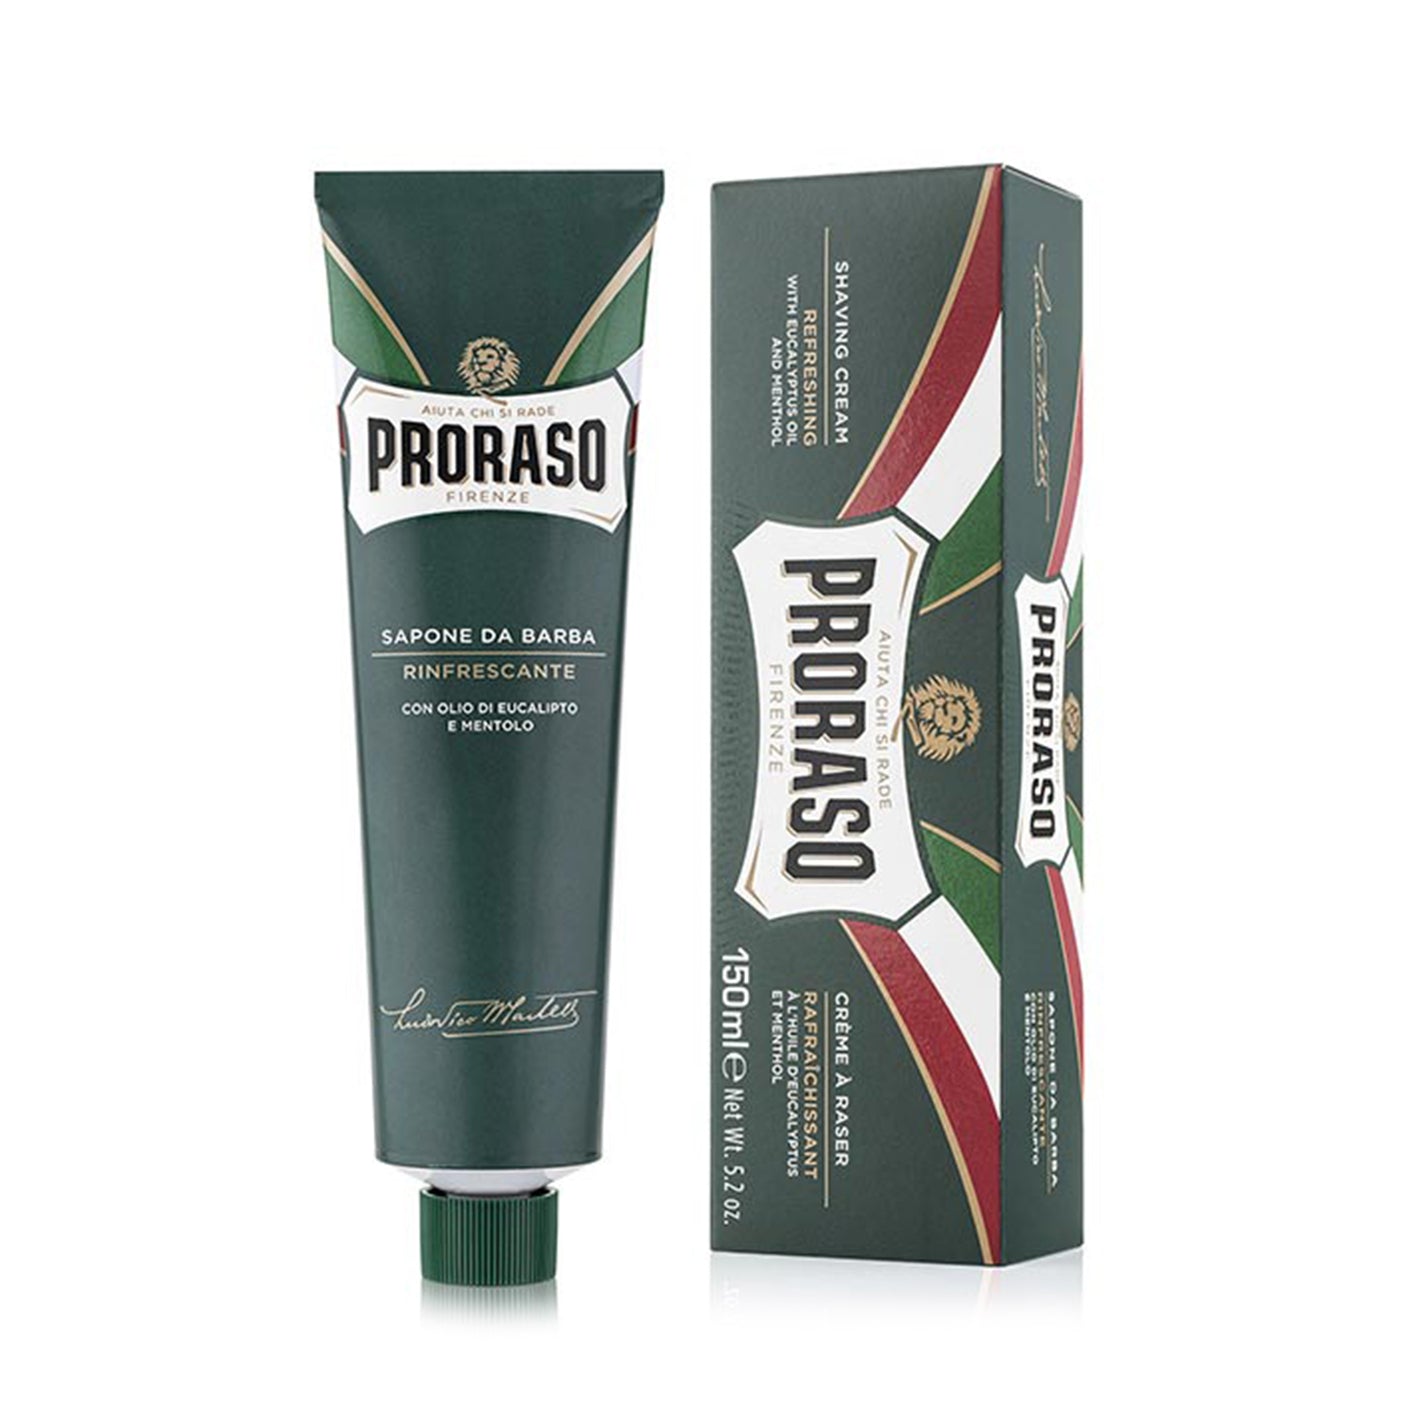 Proraso Shaving Cream Tube - Refreshing